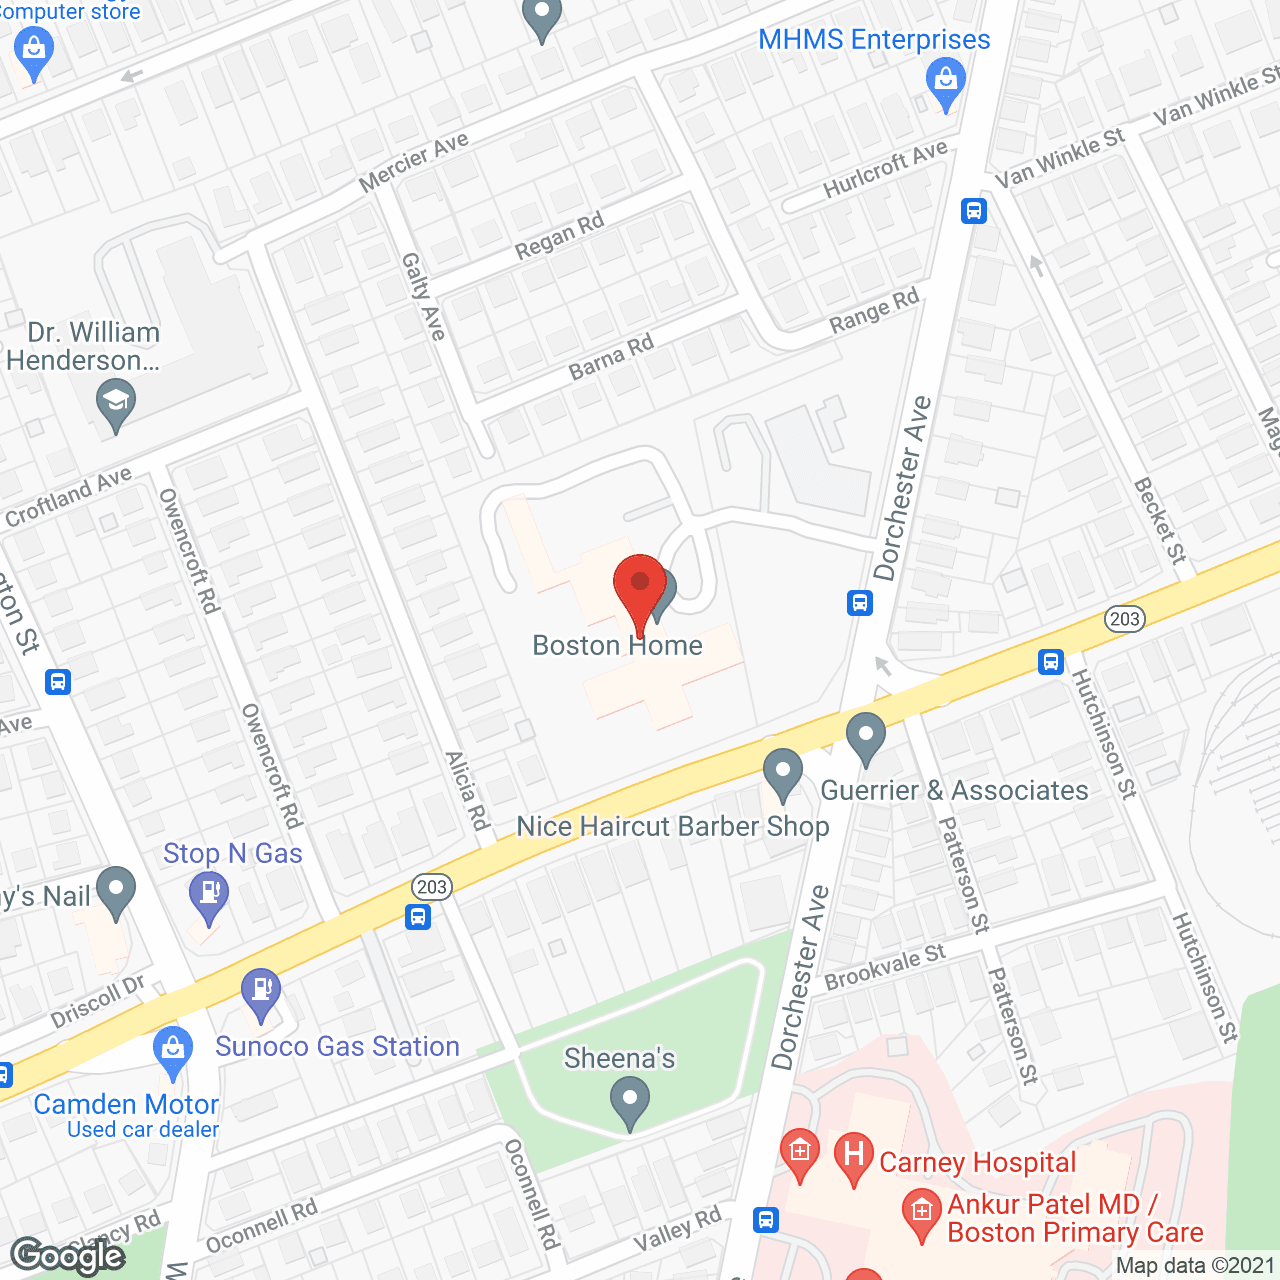 Duplicate Boston Home Inc in google map